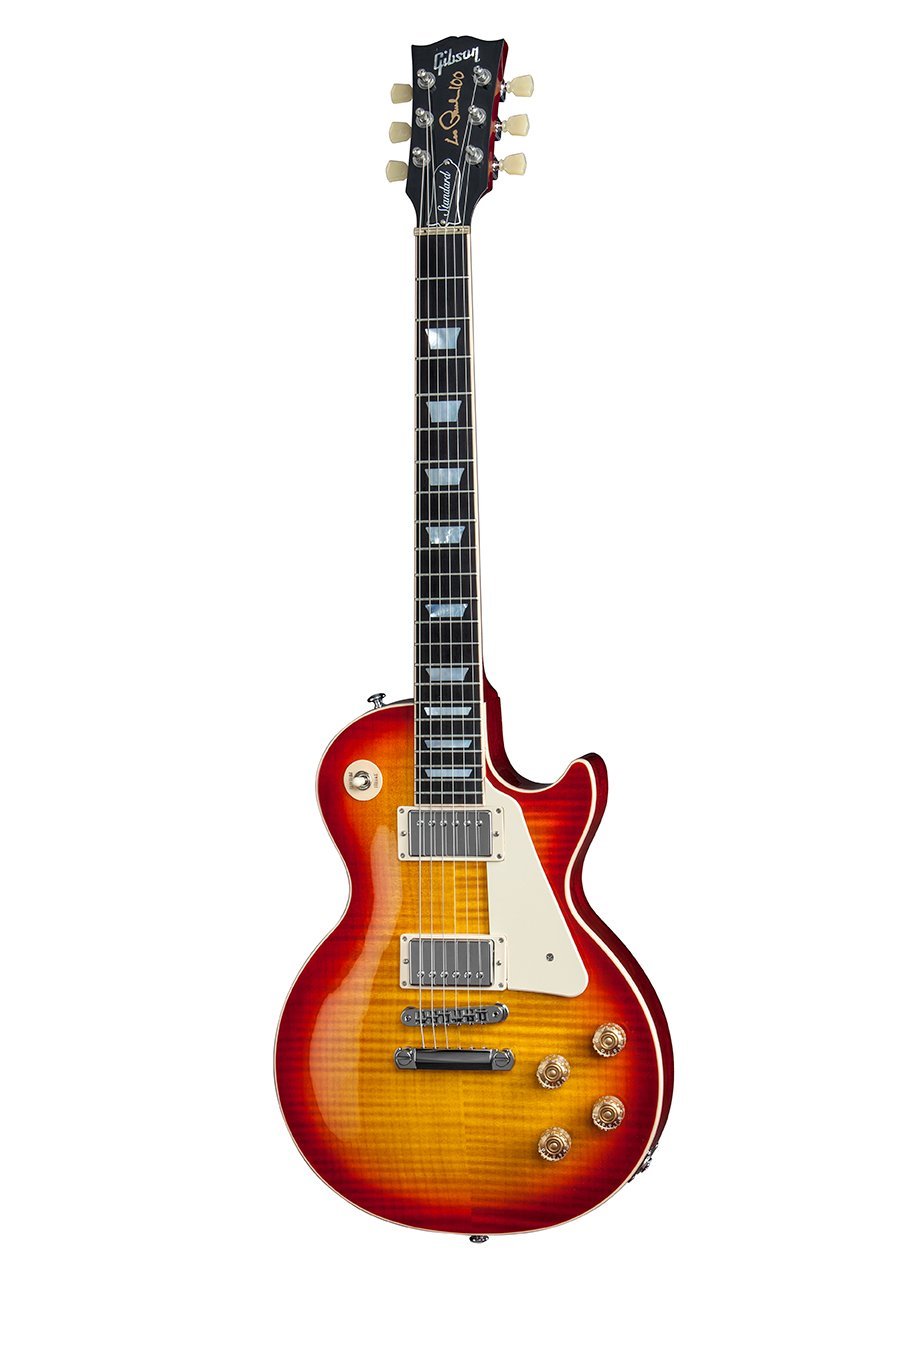 2015 Gibson Les Paul Standard in Heritage Cherry Sunburst